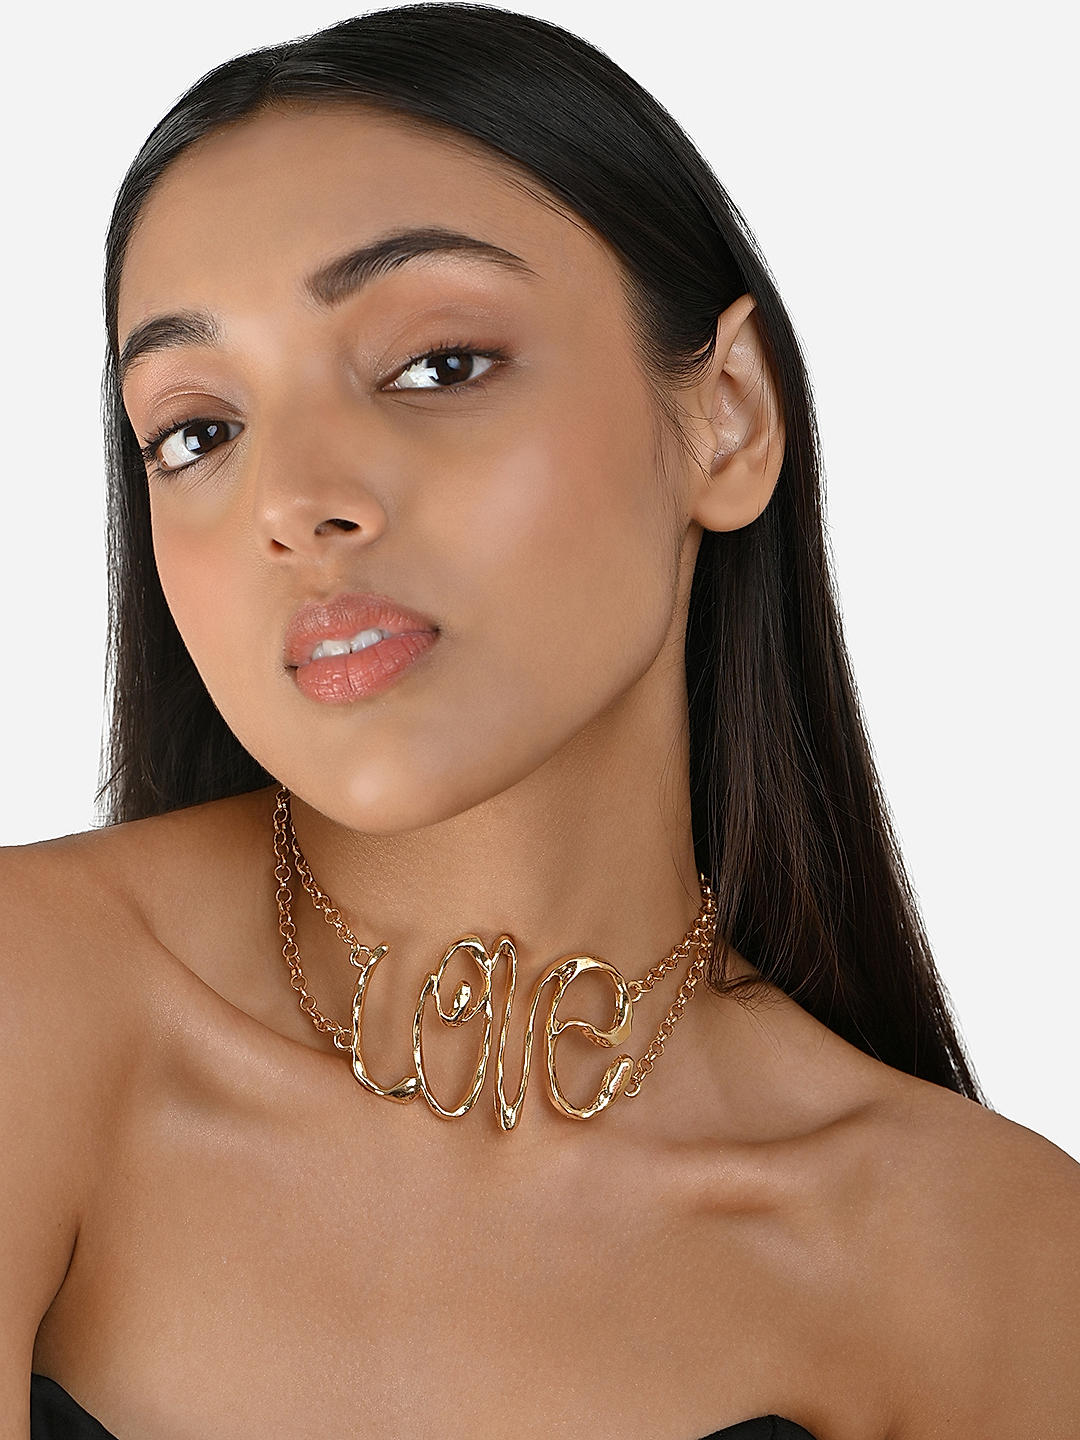 Buy Heart Charm Necklace - Perfect Love Choker Now! – Dazzledvenus